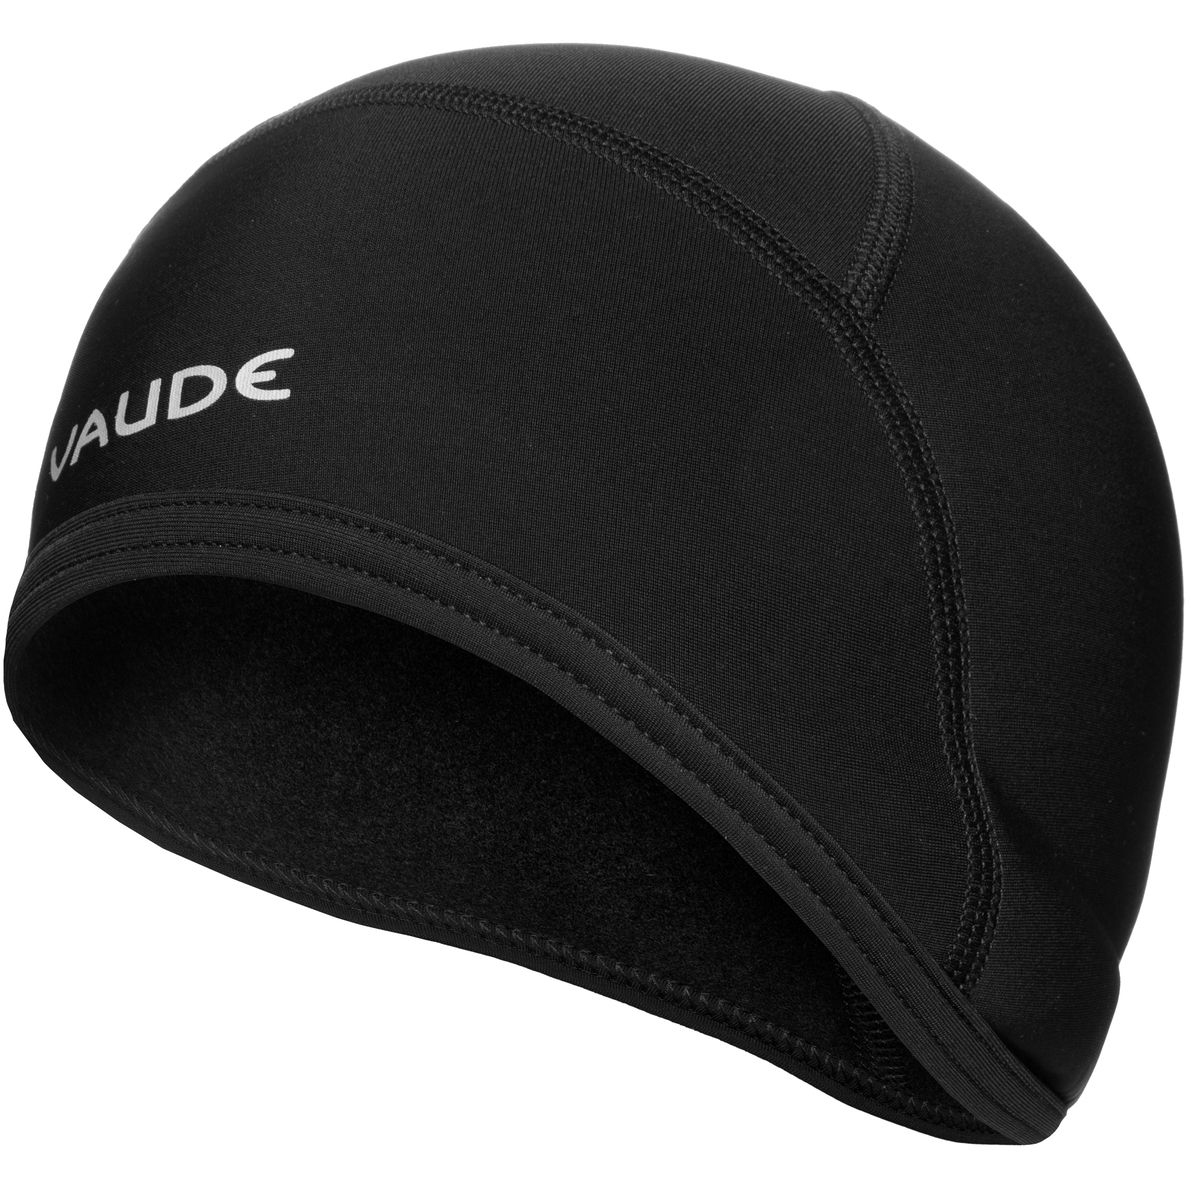 Picture of Vaude Bike Warm Cap - black/white